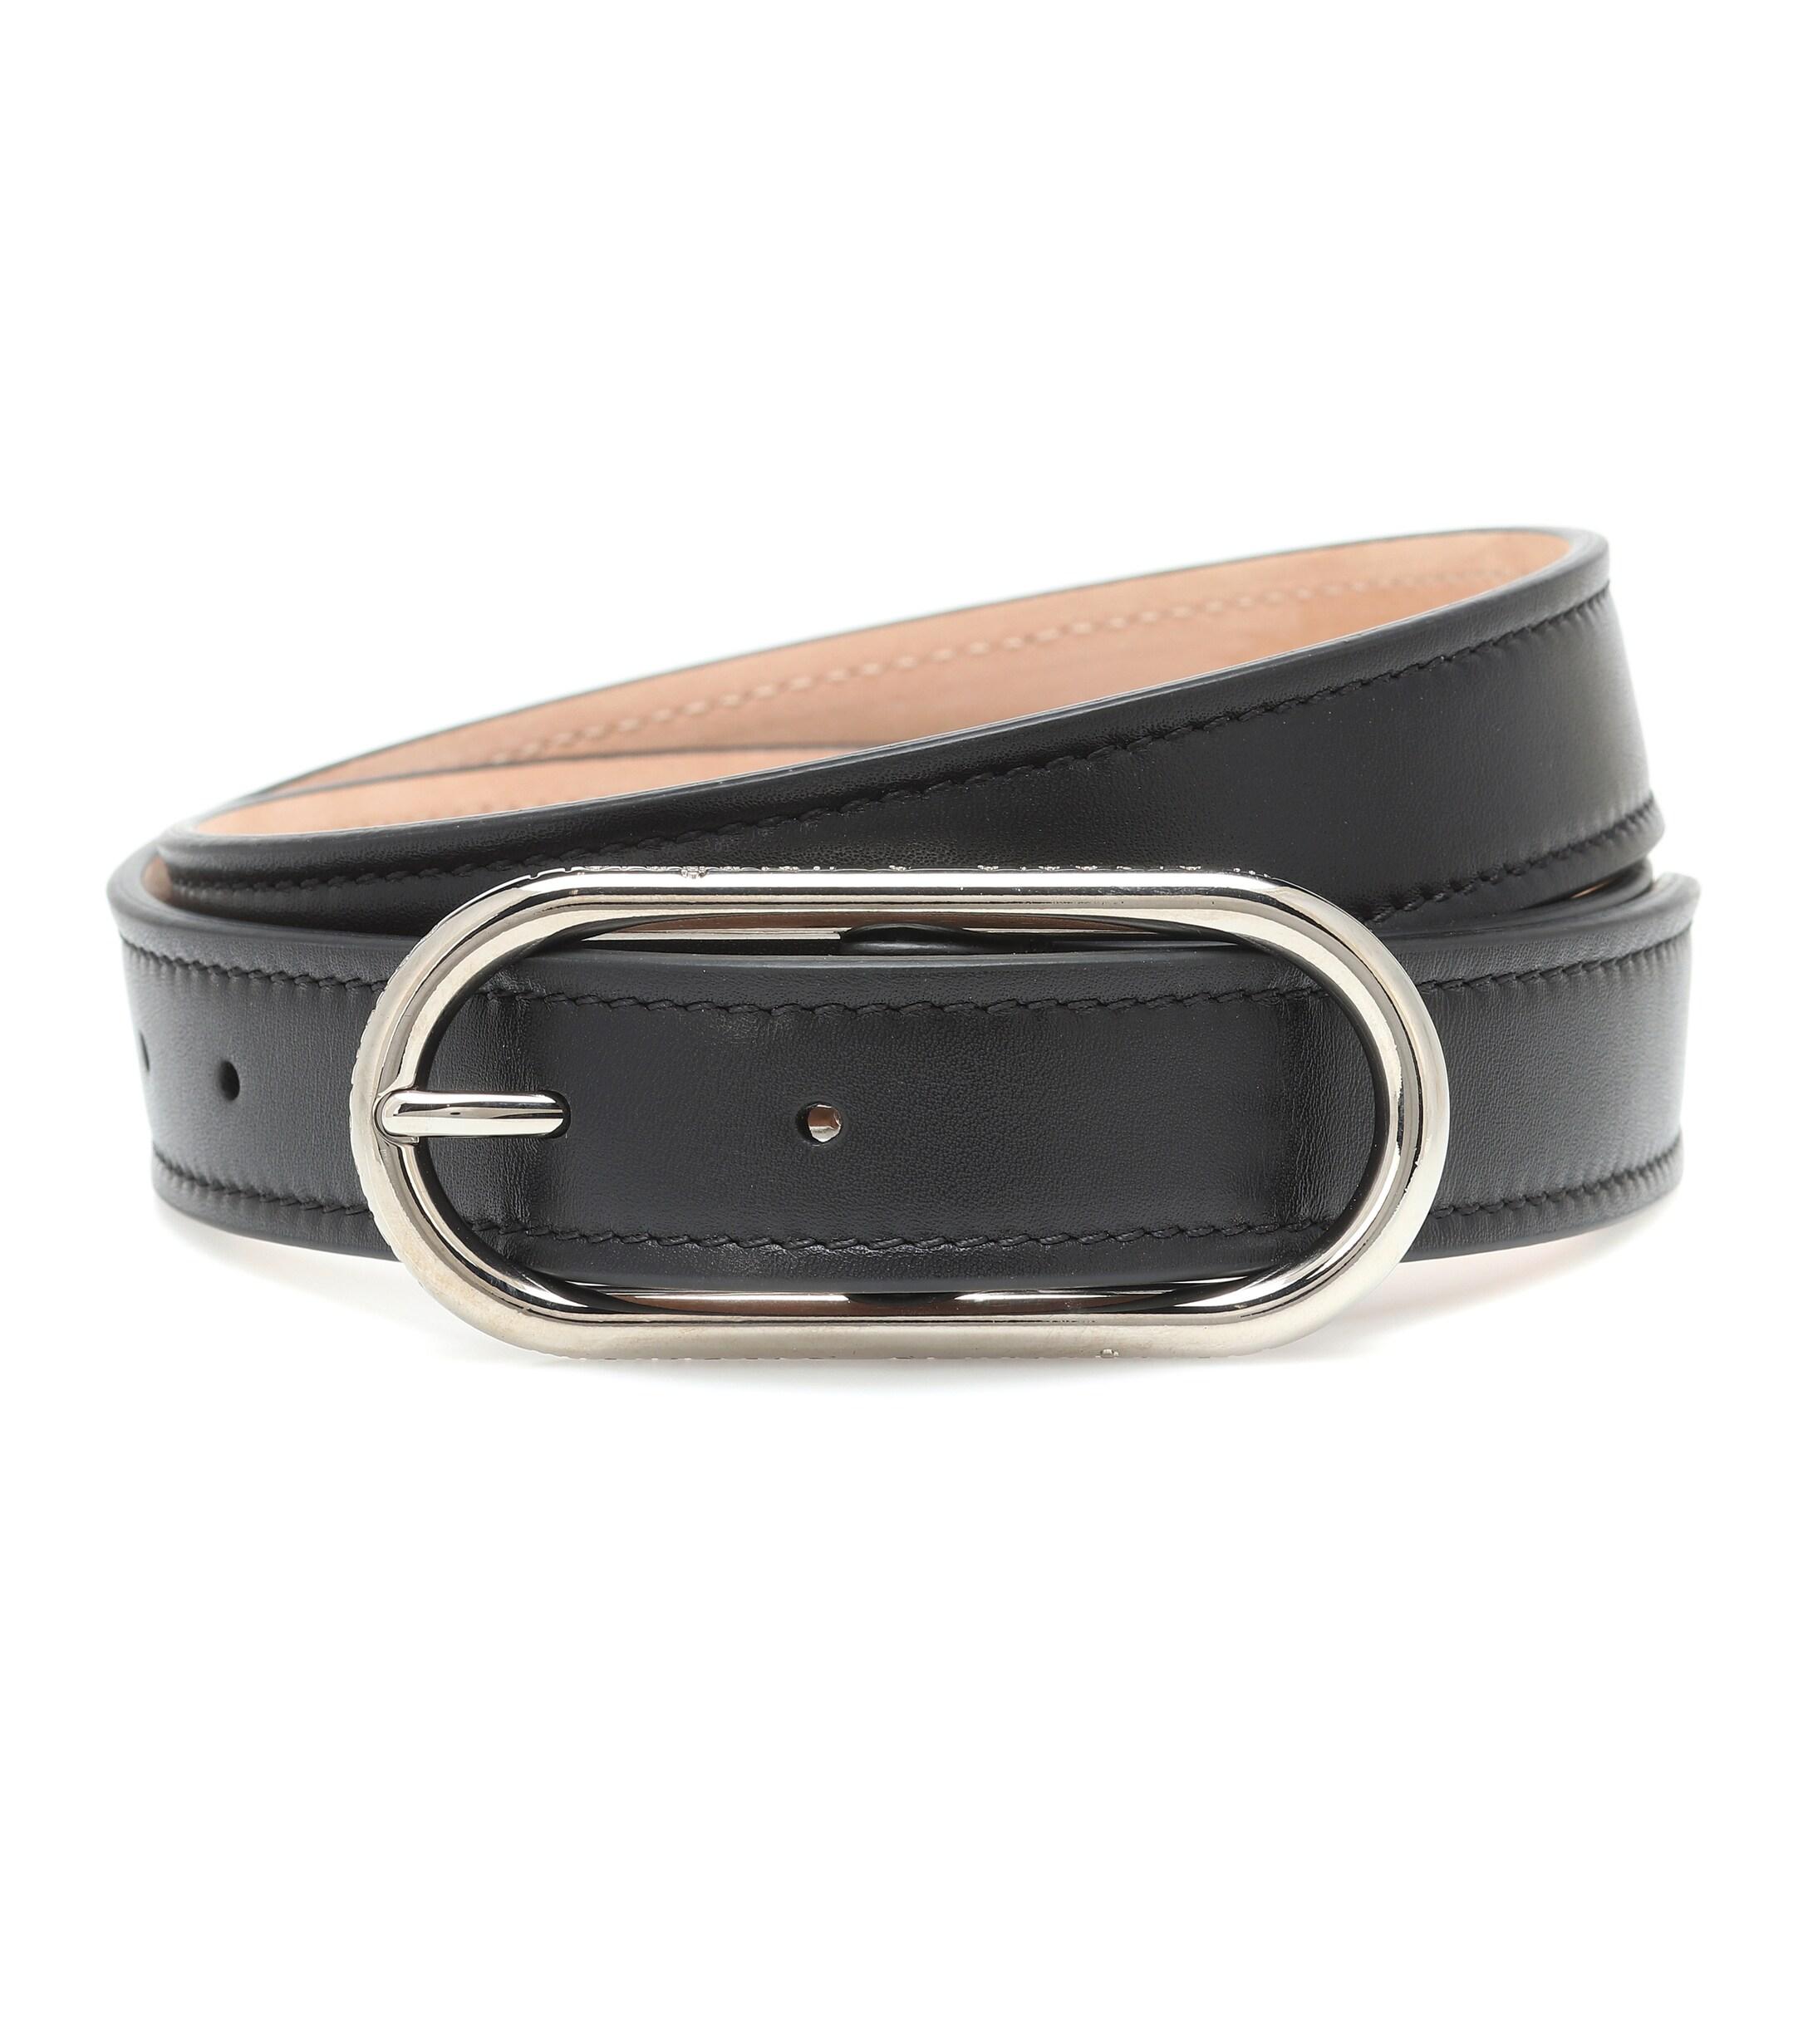 Acne Studios Leather Belt in Black - Lyst